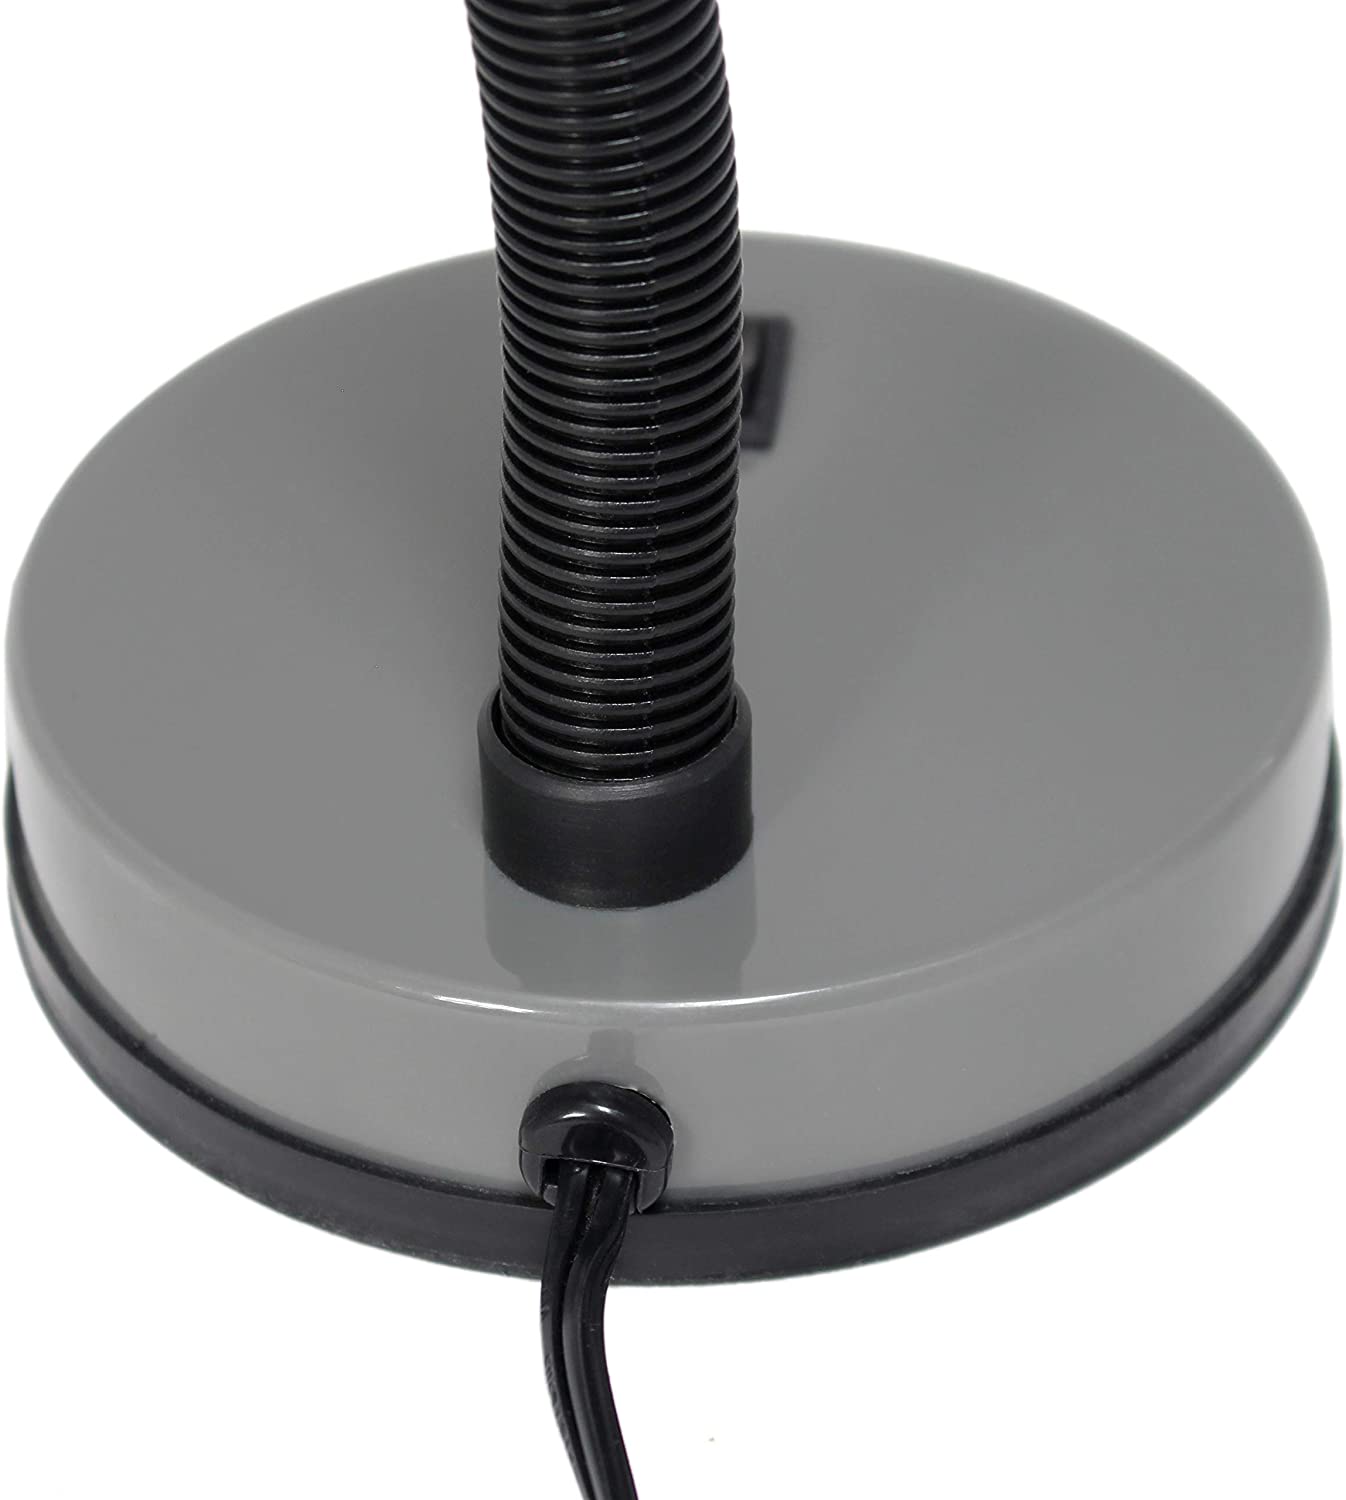 Simple Designs LD1003-GRY Basic Metal Flexible Hose Neck Desk Lamp, Gray